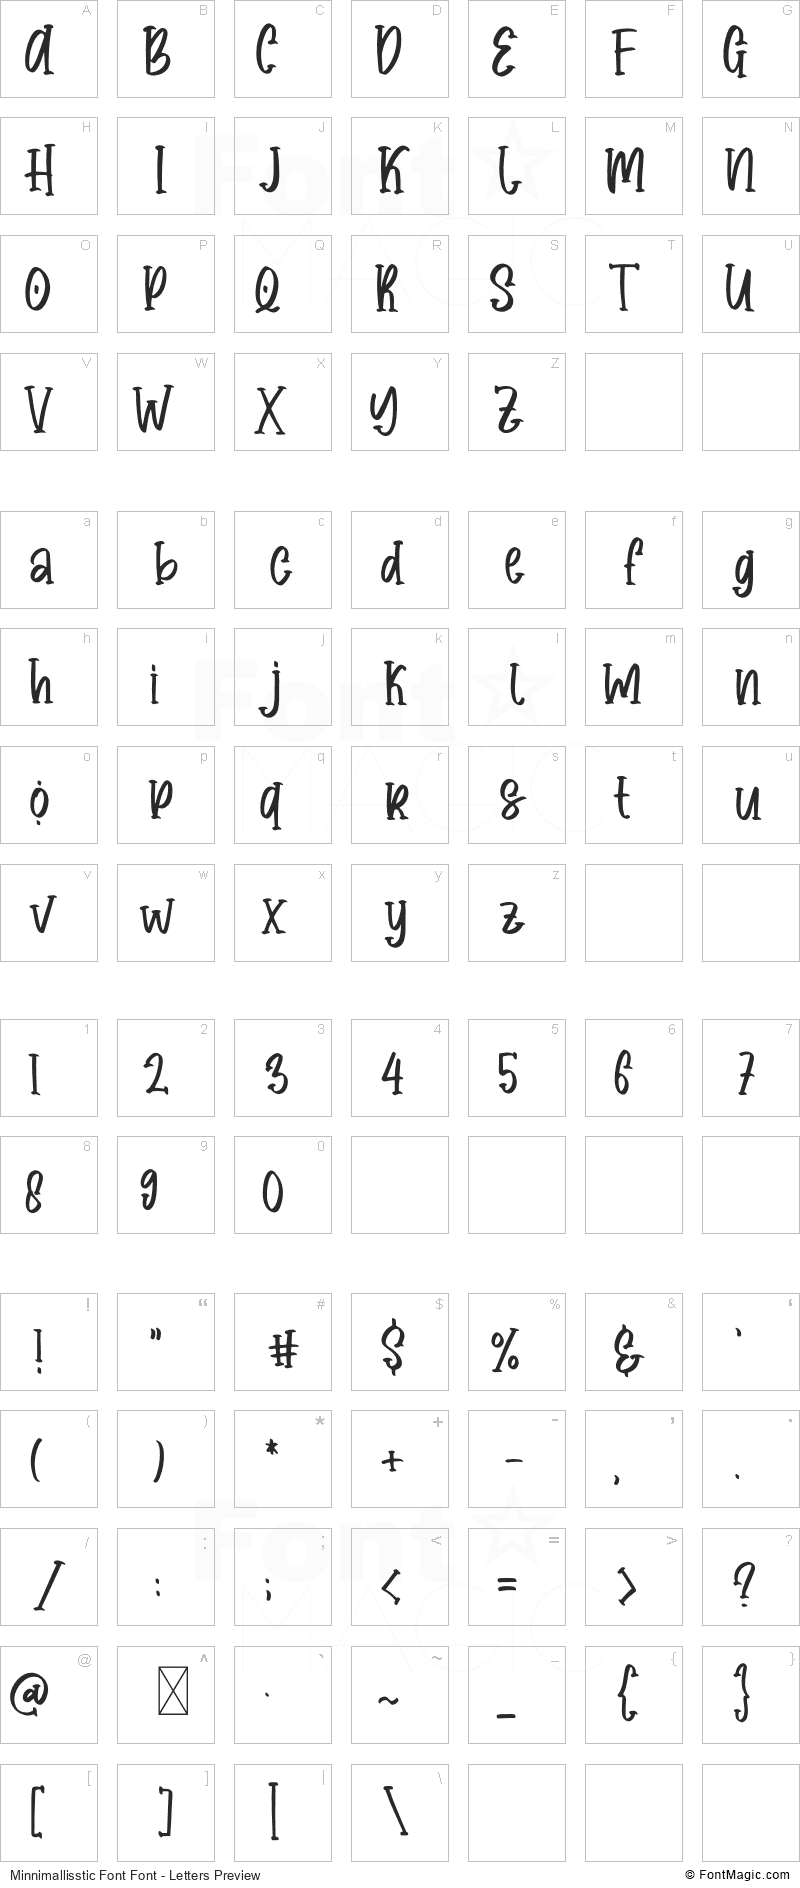 Minnimallisstic Font Font - All Latters Preview Chart